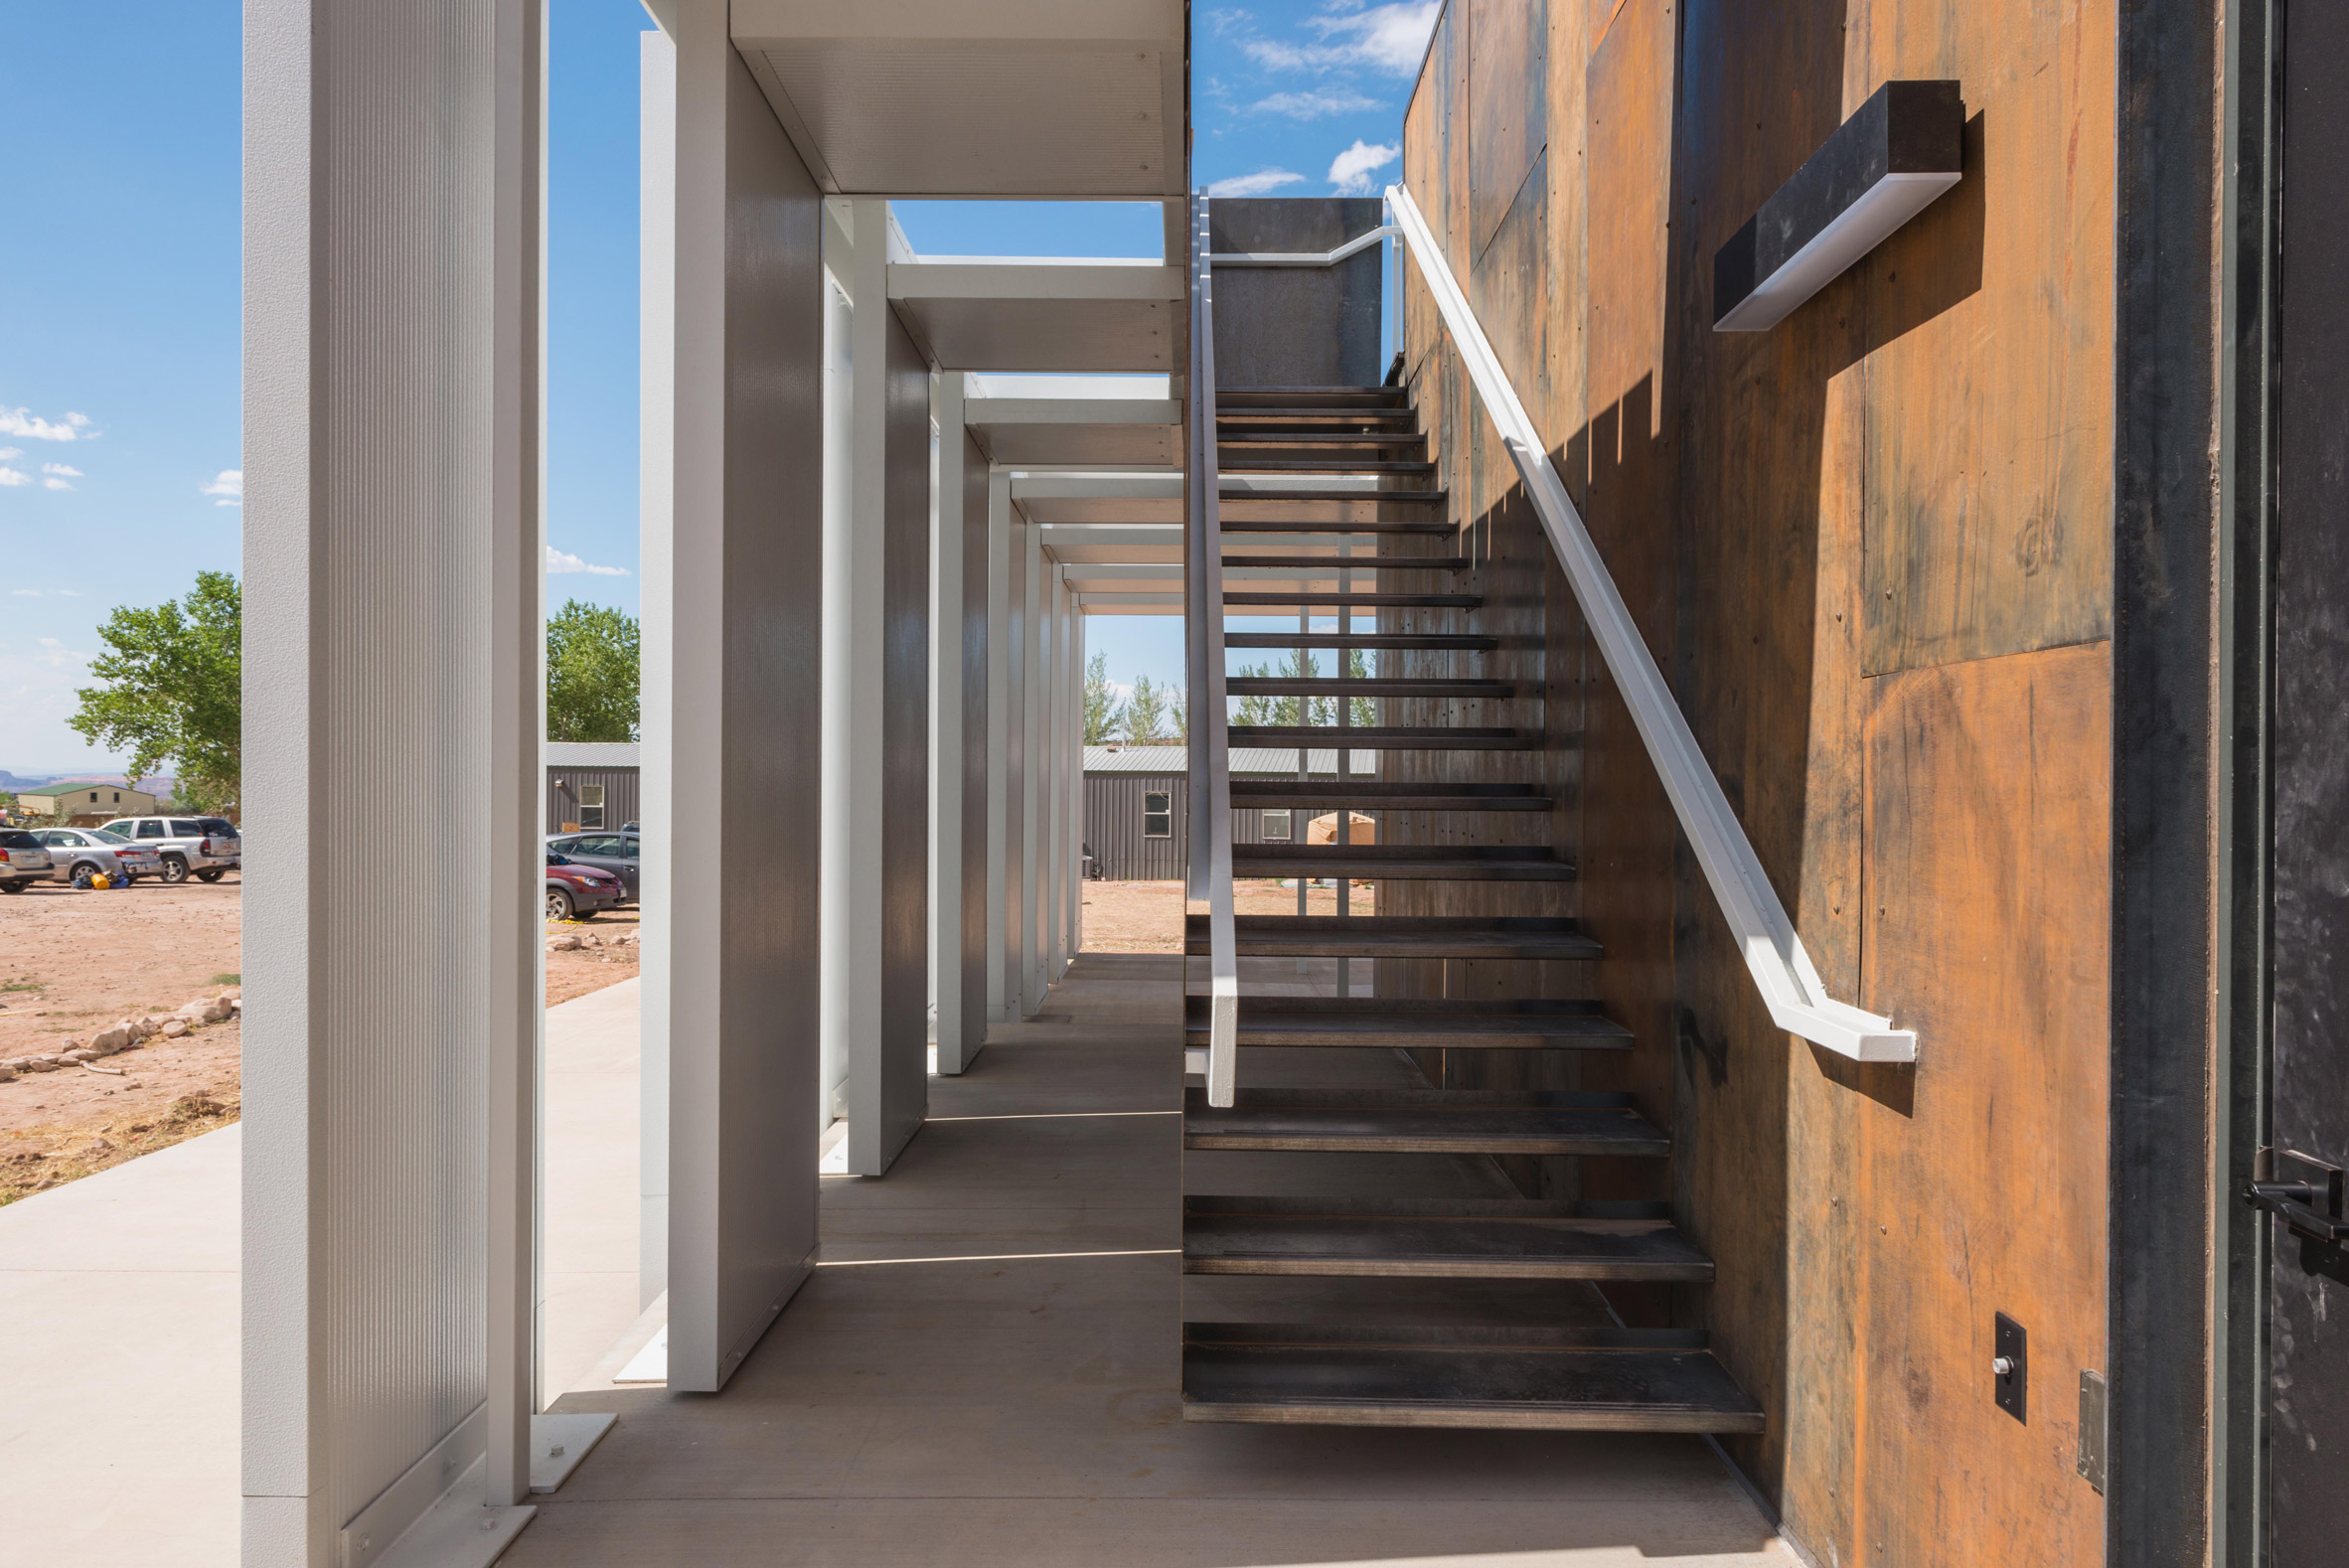 Architecture students build community hall in Utah desert using repurposed materials